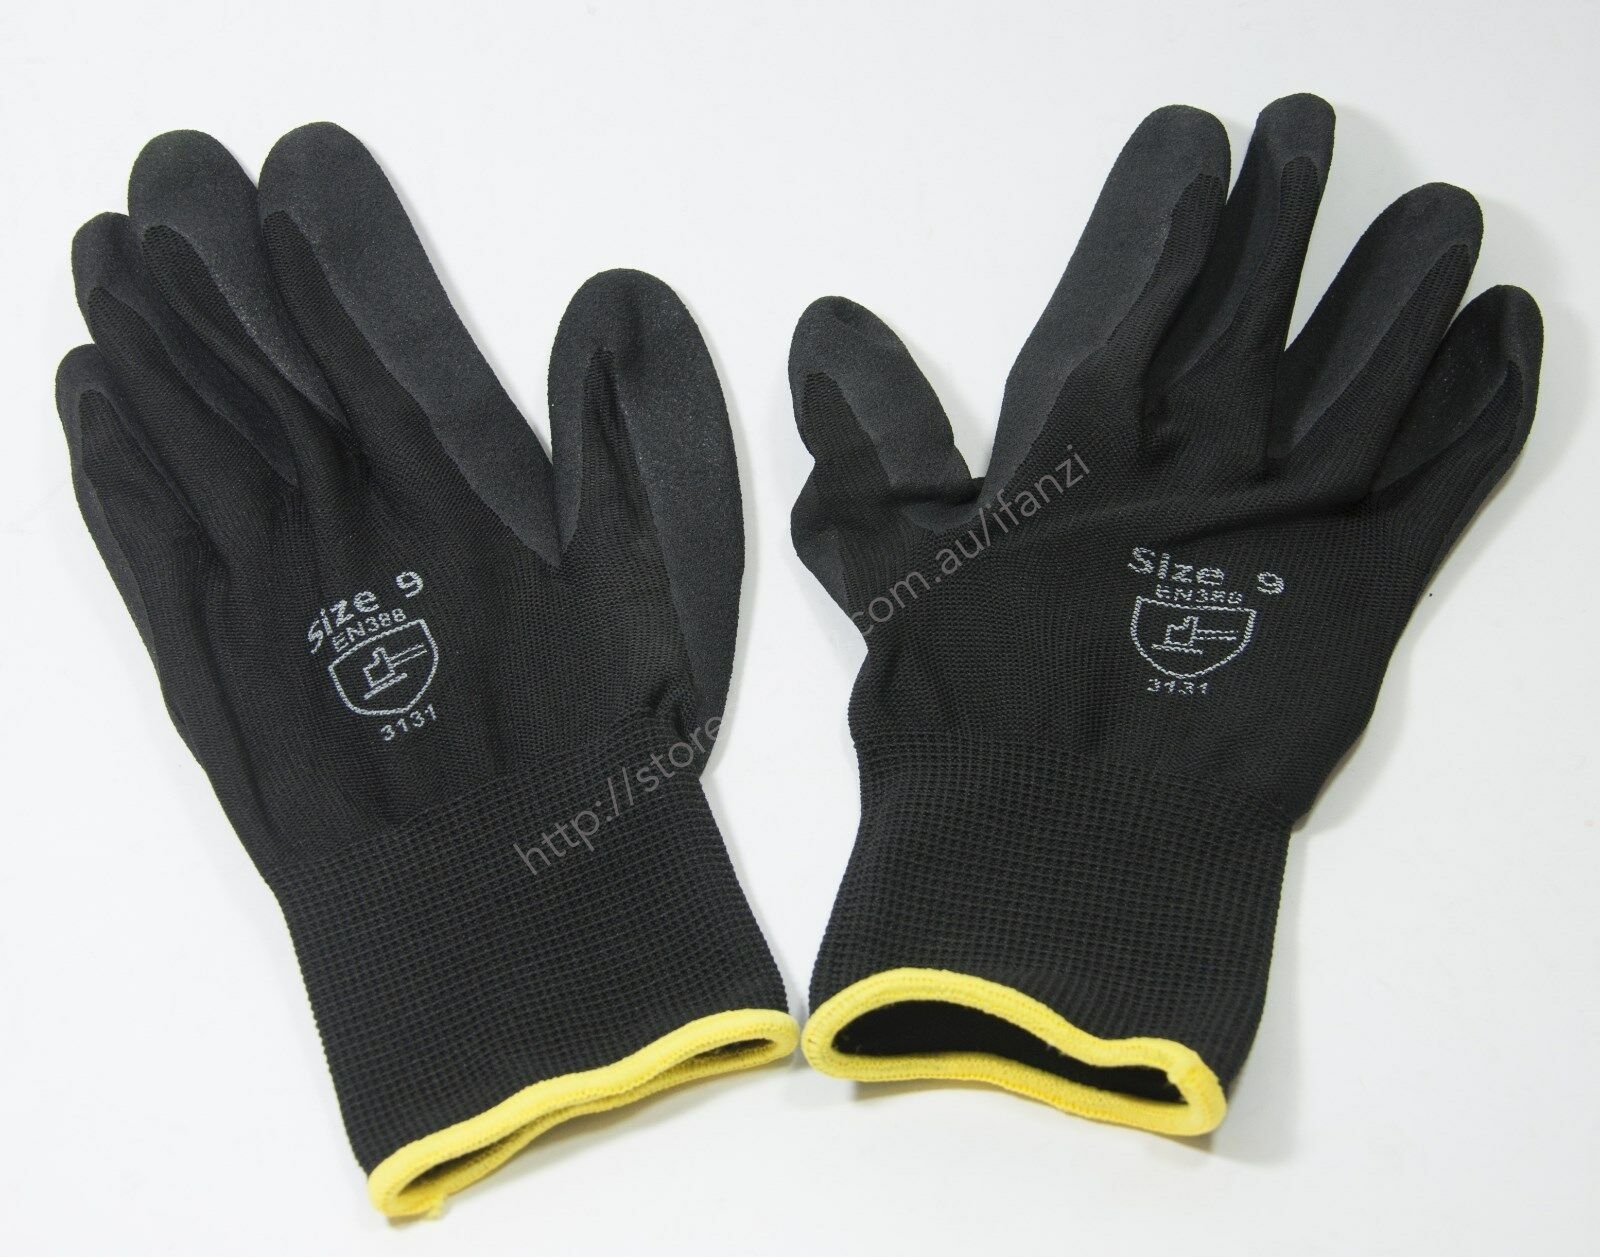 AUSTORE Nitrile Gloves Sandy Finished Size 9 8242